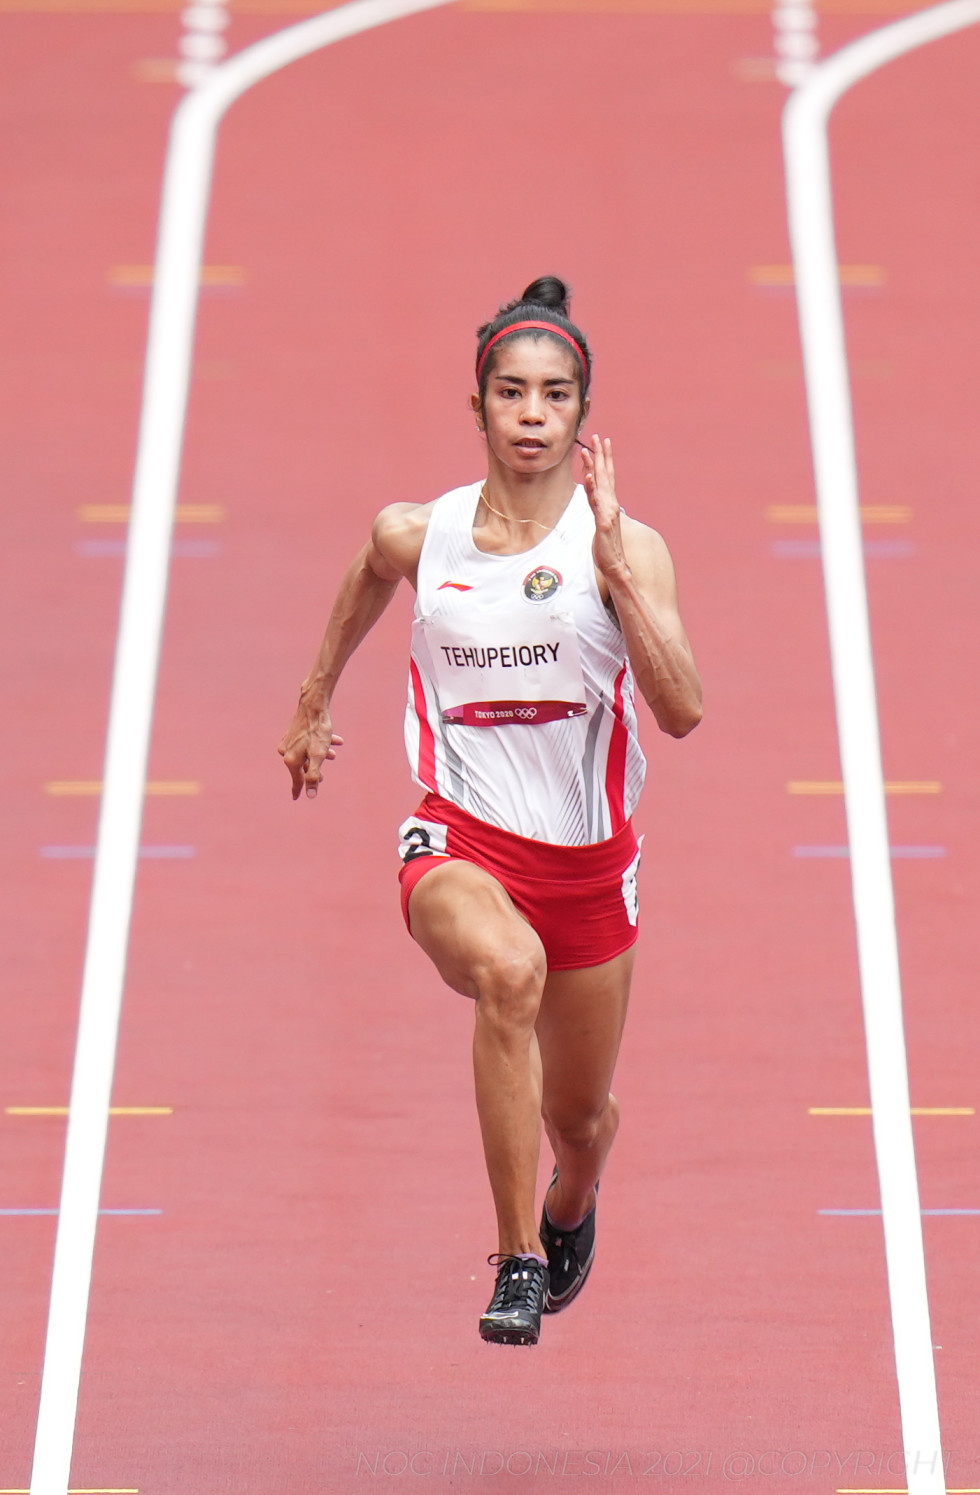 Alvin Tehupeiory: "Olympics a precious experience" - Indonesia Olympic Commitee